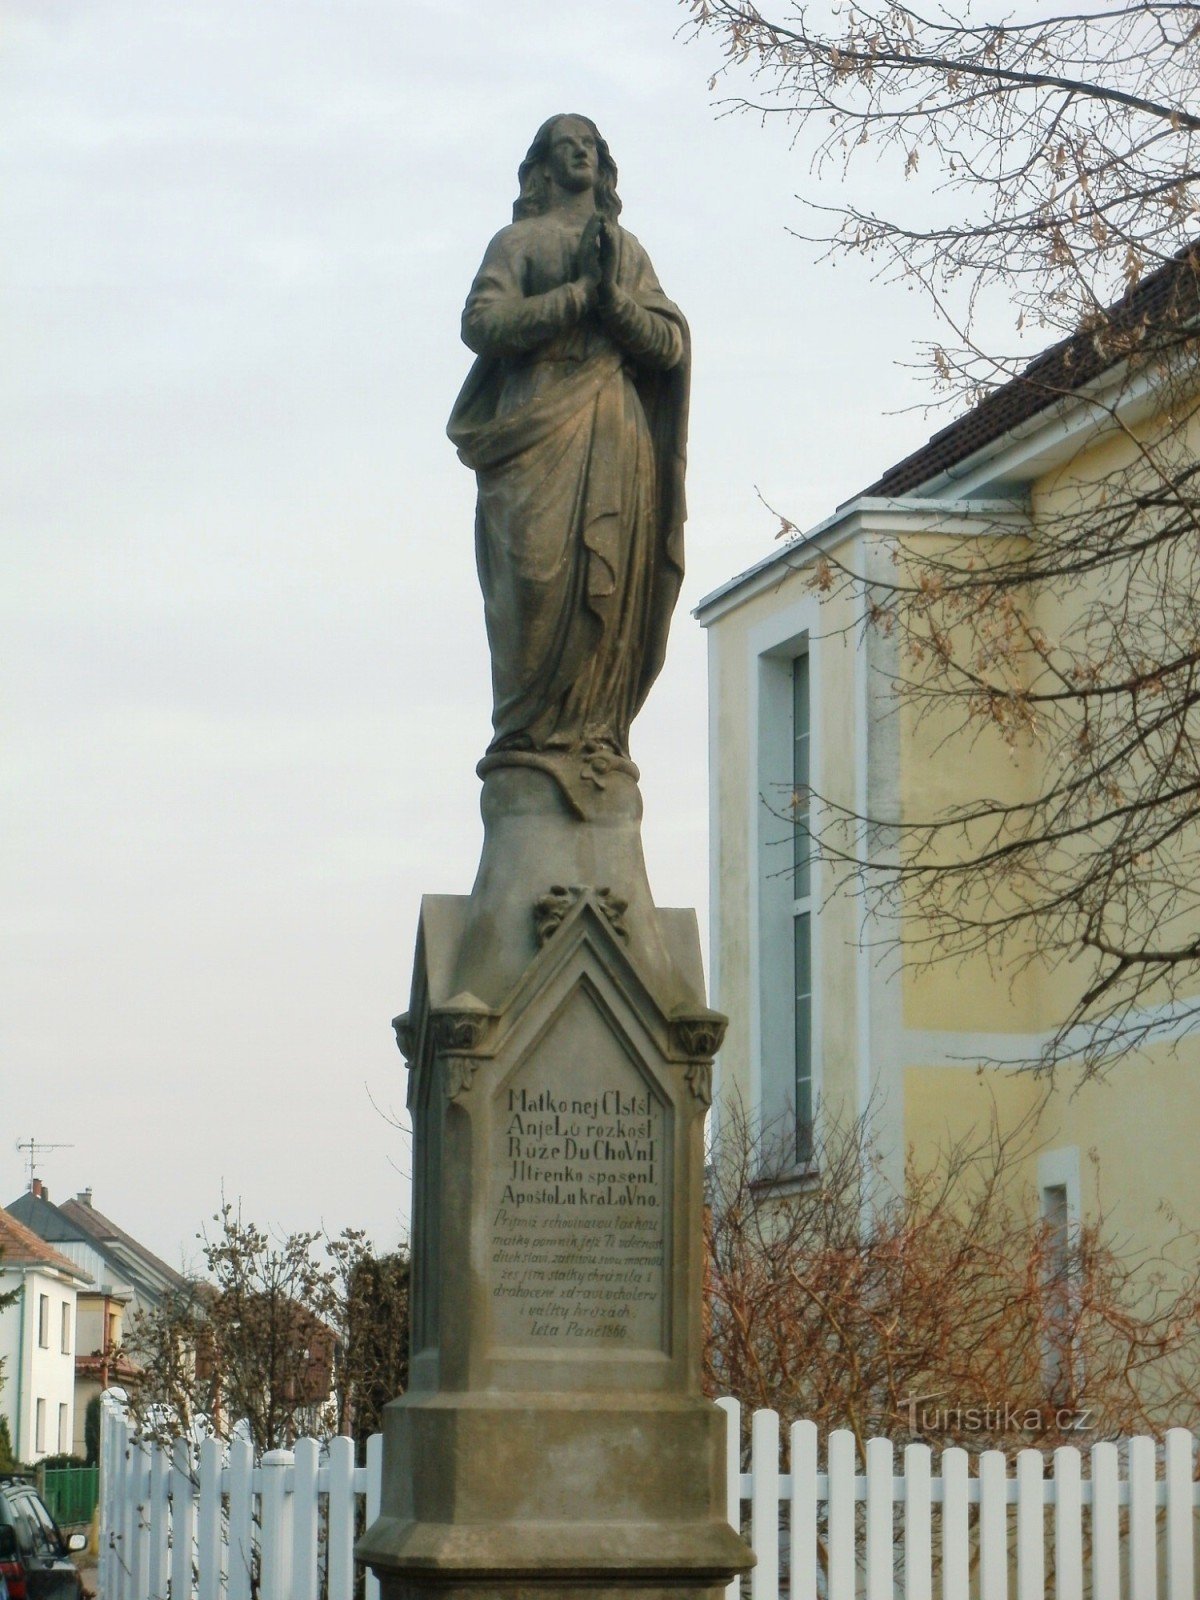 Nový Bydžov - 聖ヨハネの像があるモニュメント。 聖母マリア